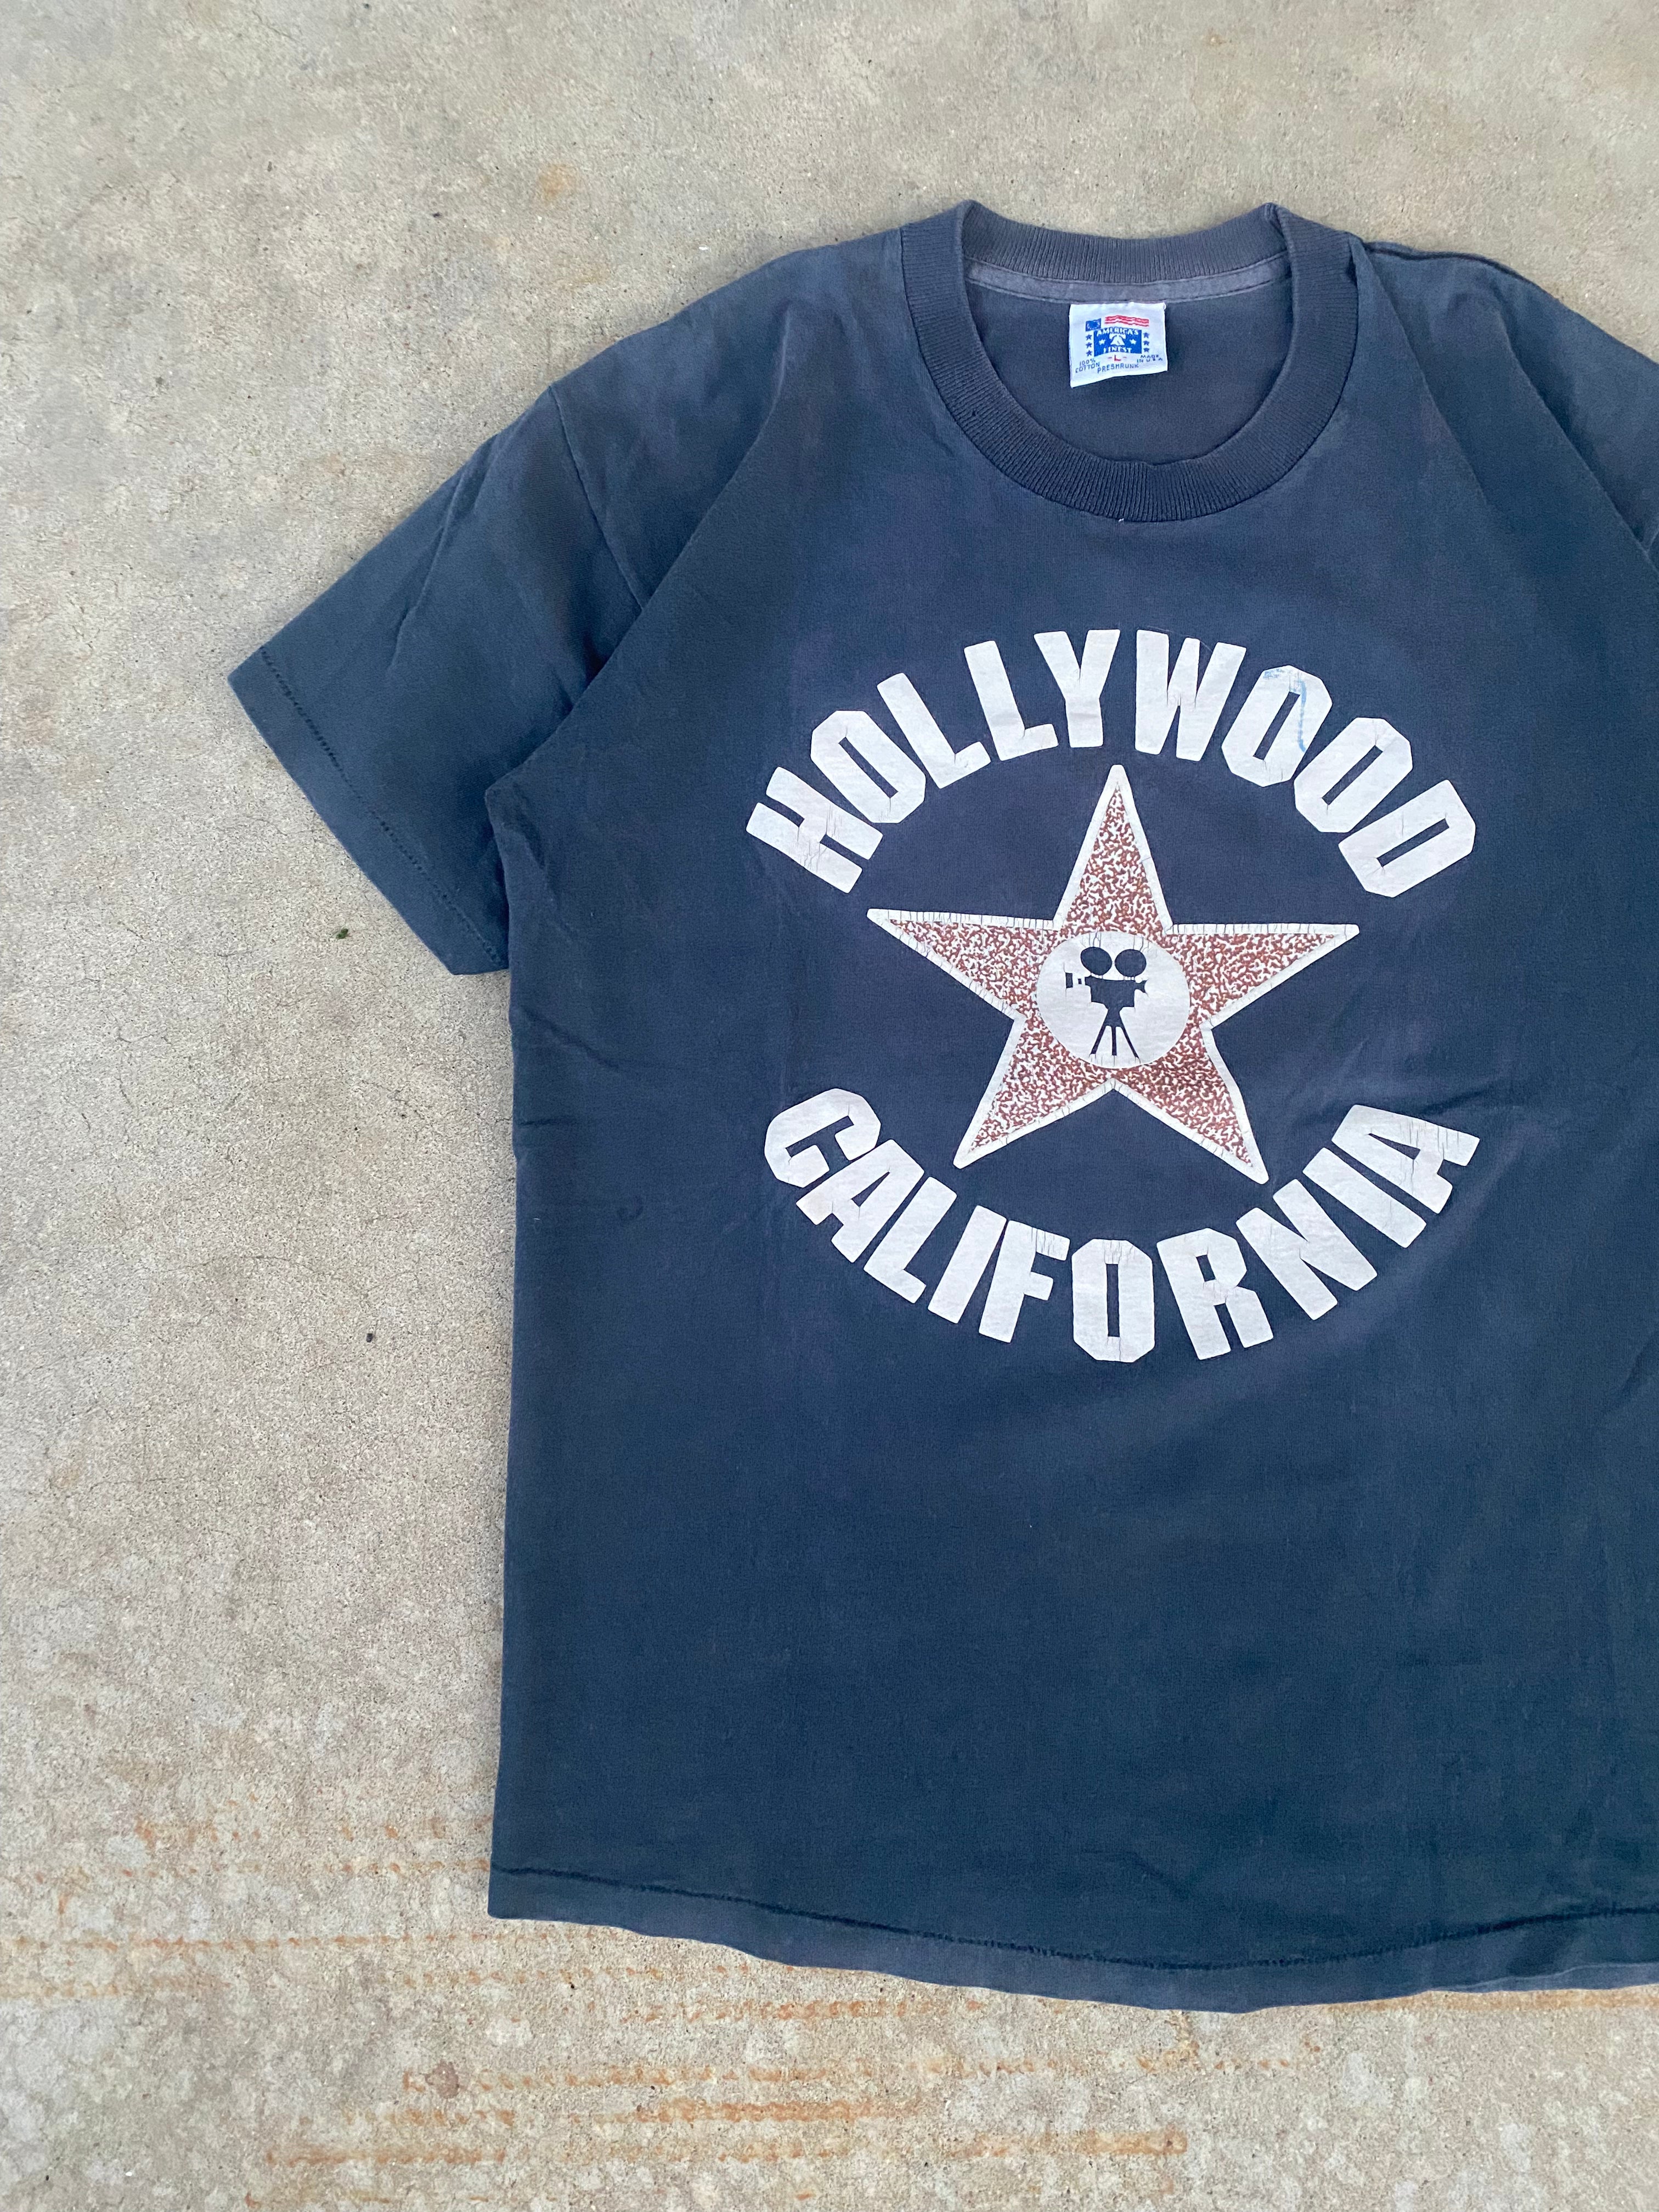 1990s Hollywood California T-Shirt (M)